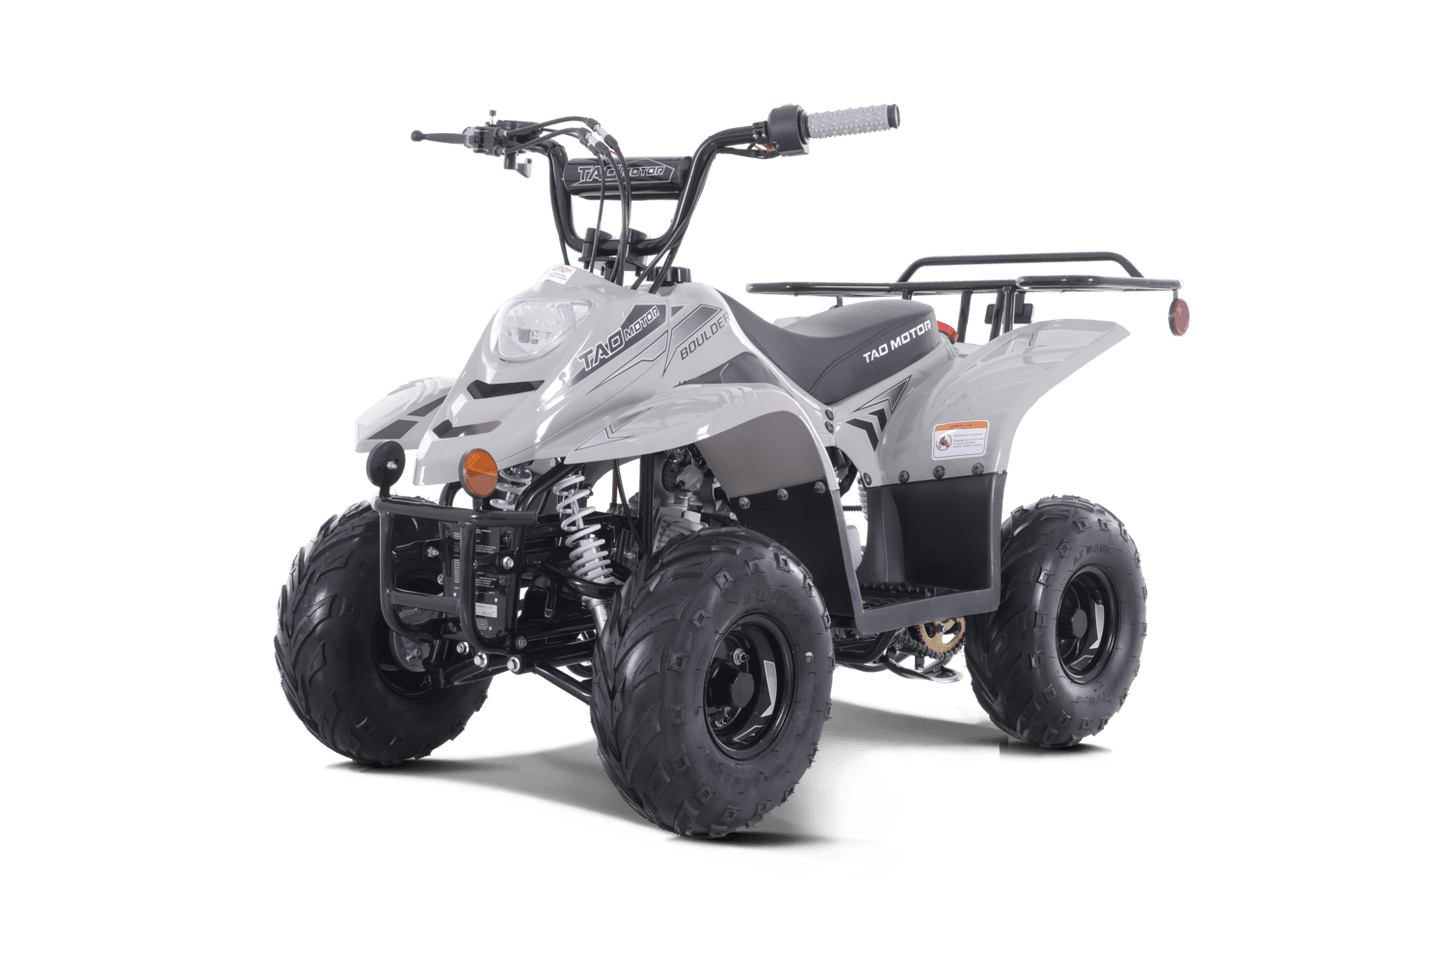 Tao Boulder 110cc ATV (New Model)